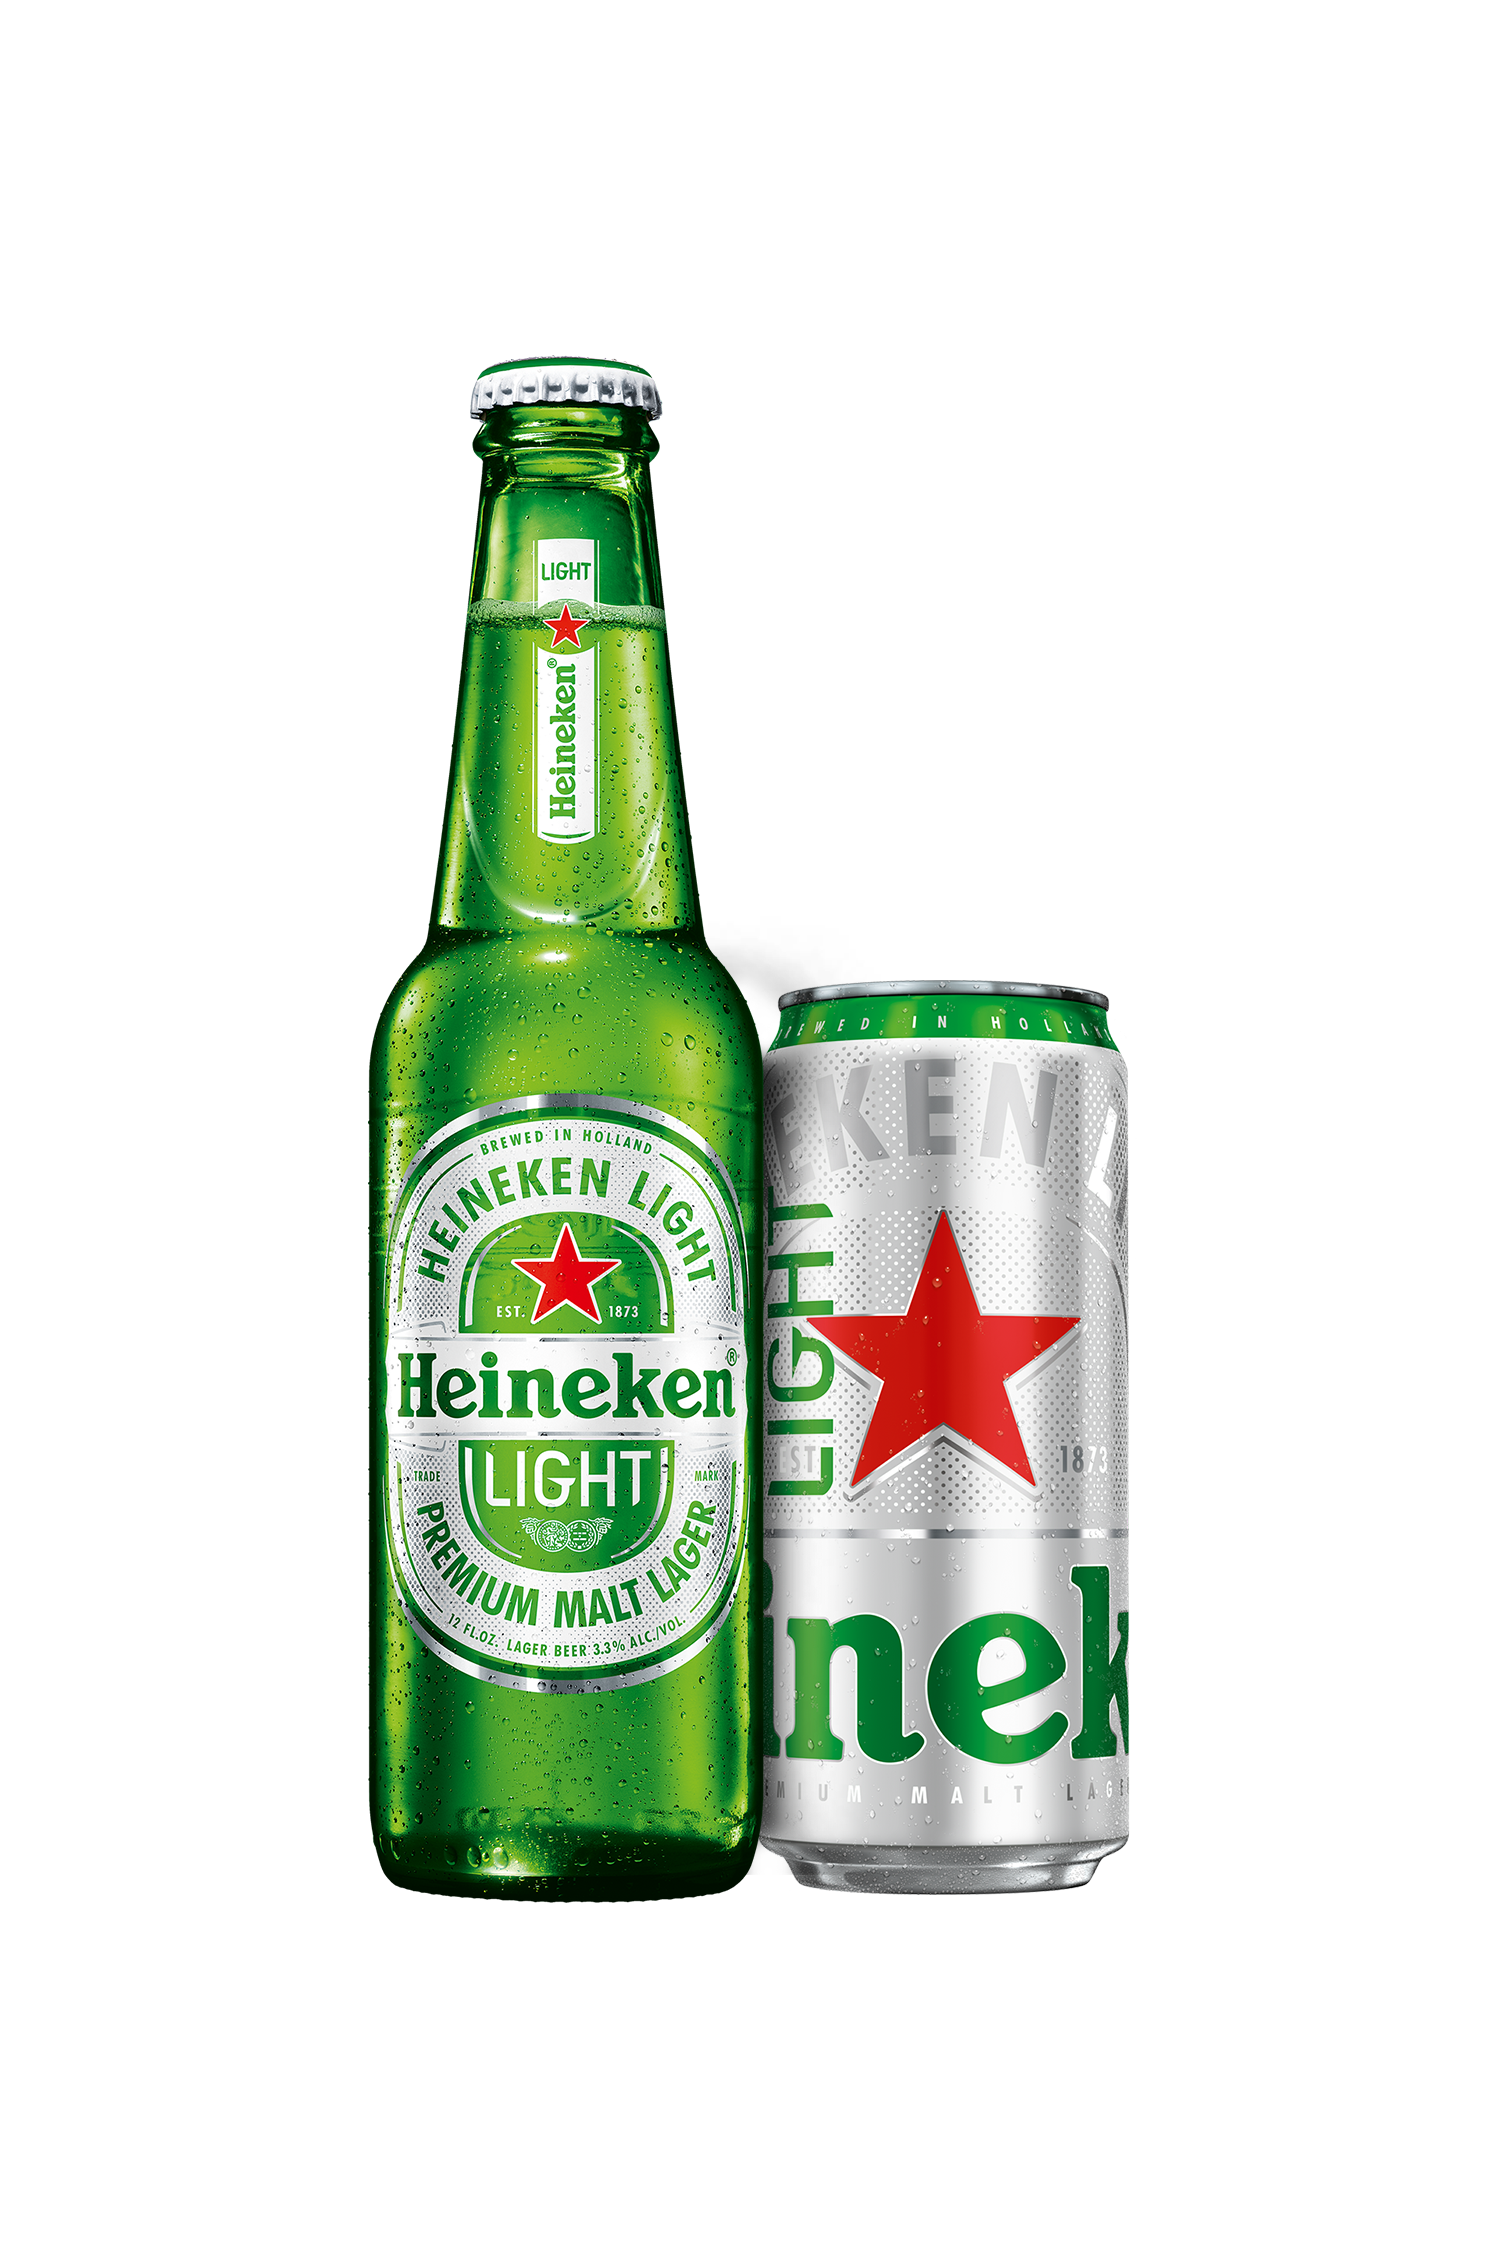 How Much Alcohol in Heineken Light?